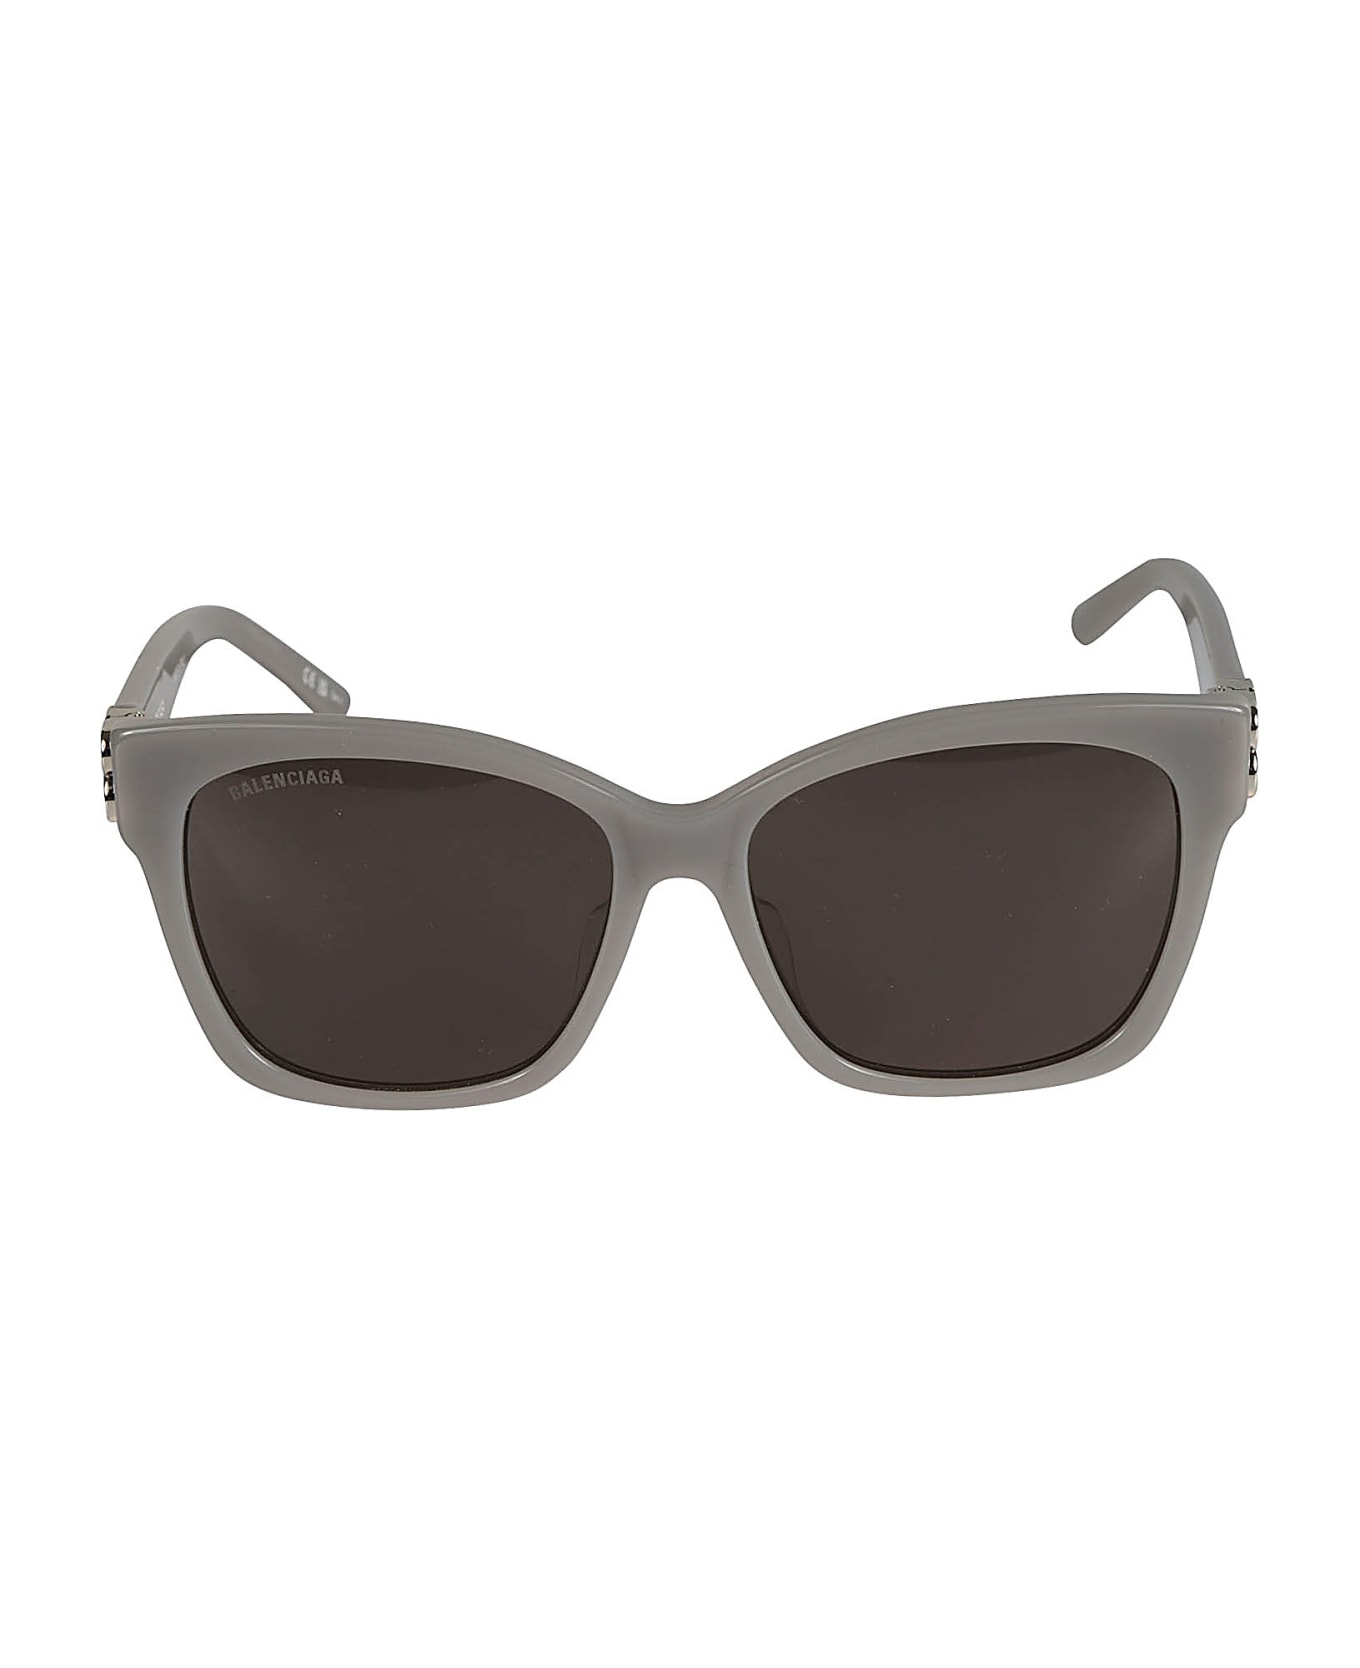 Balenciaga Eyewear Bb0102sa Sunglasses - 011 GREY SILVER GREY